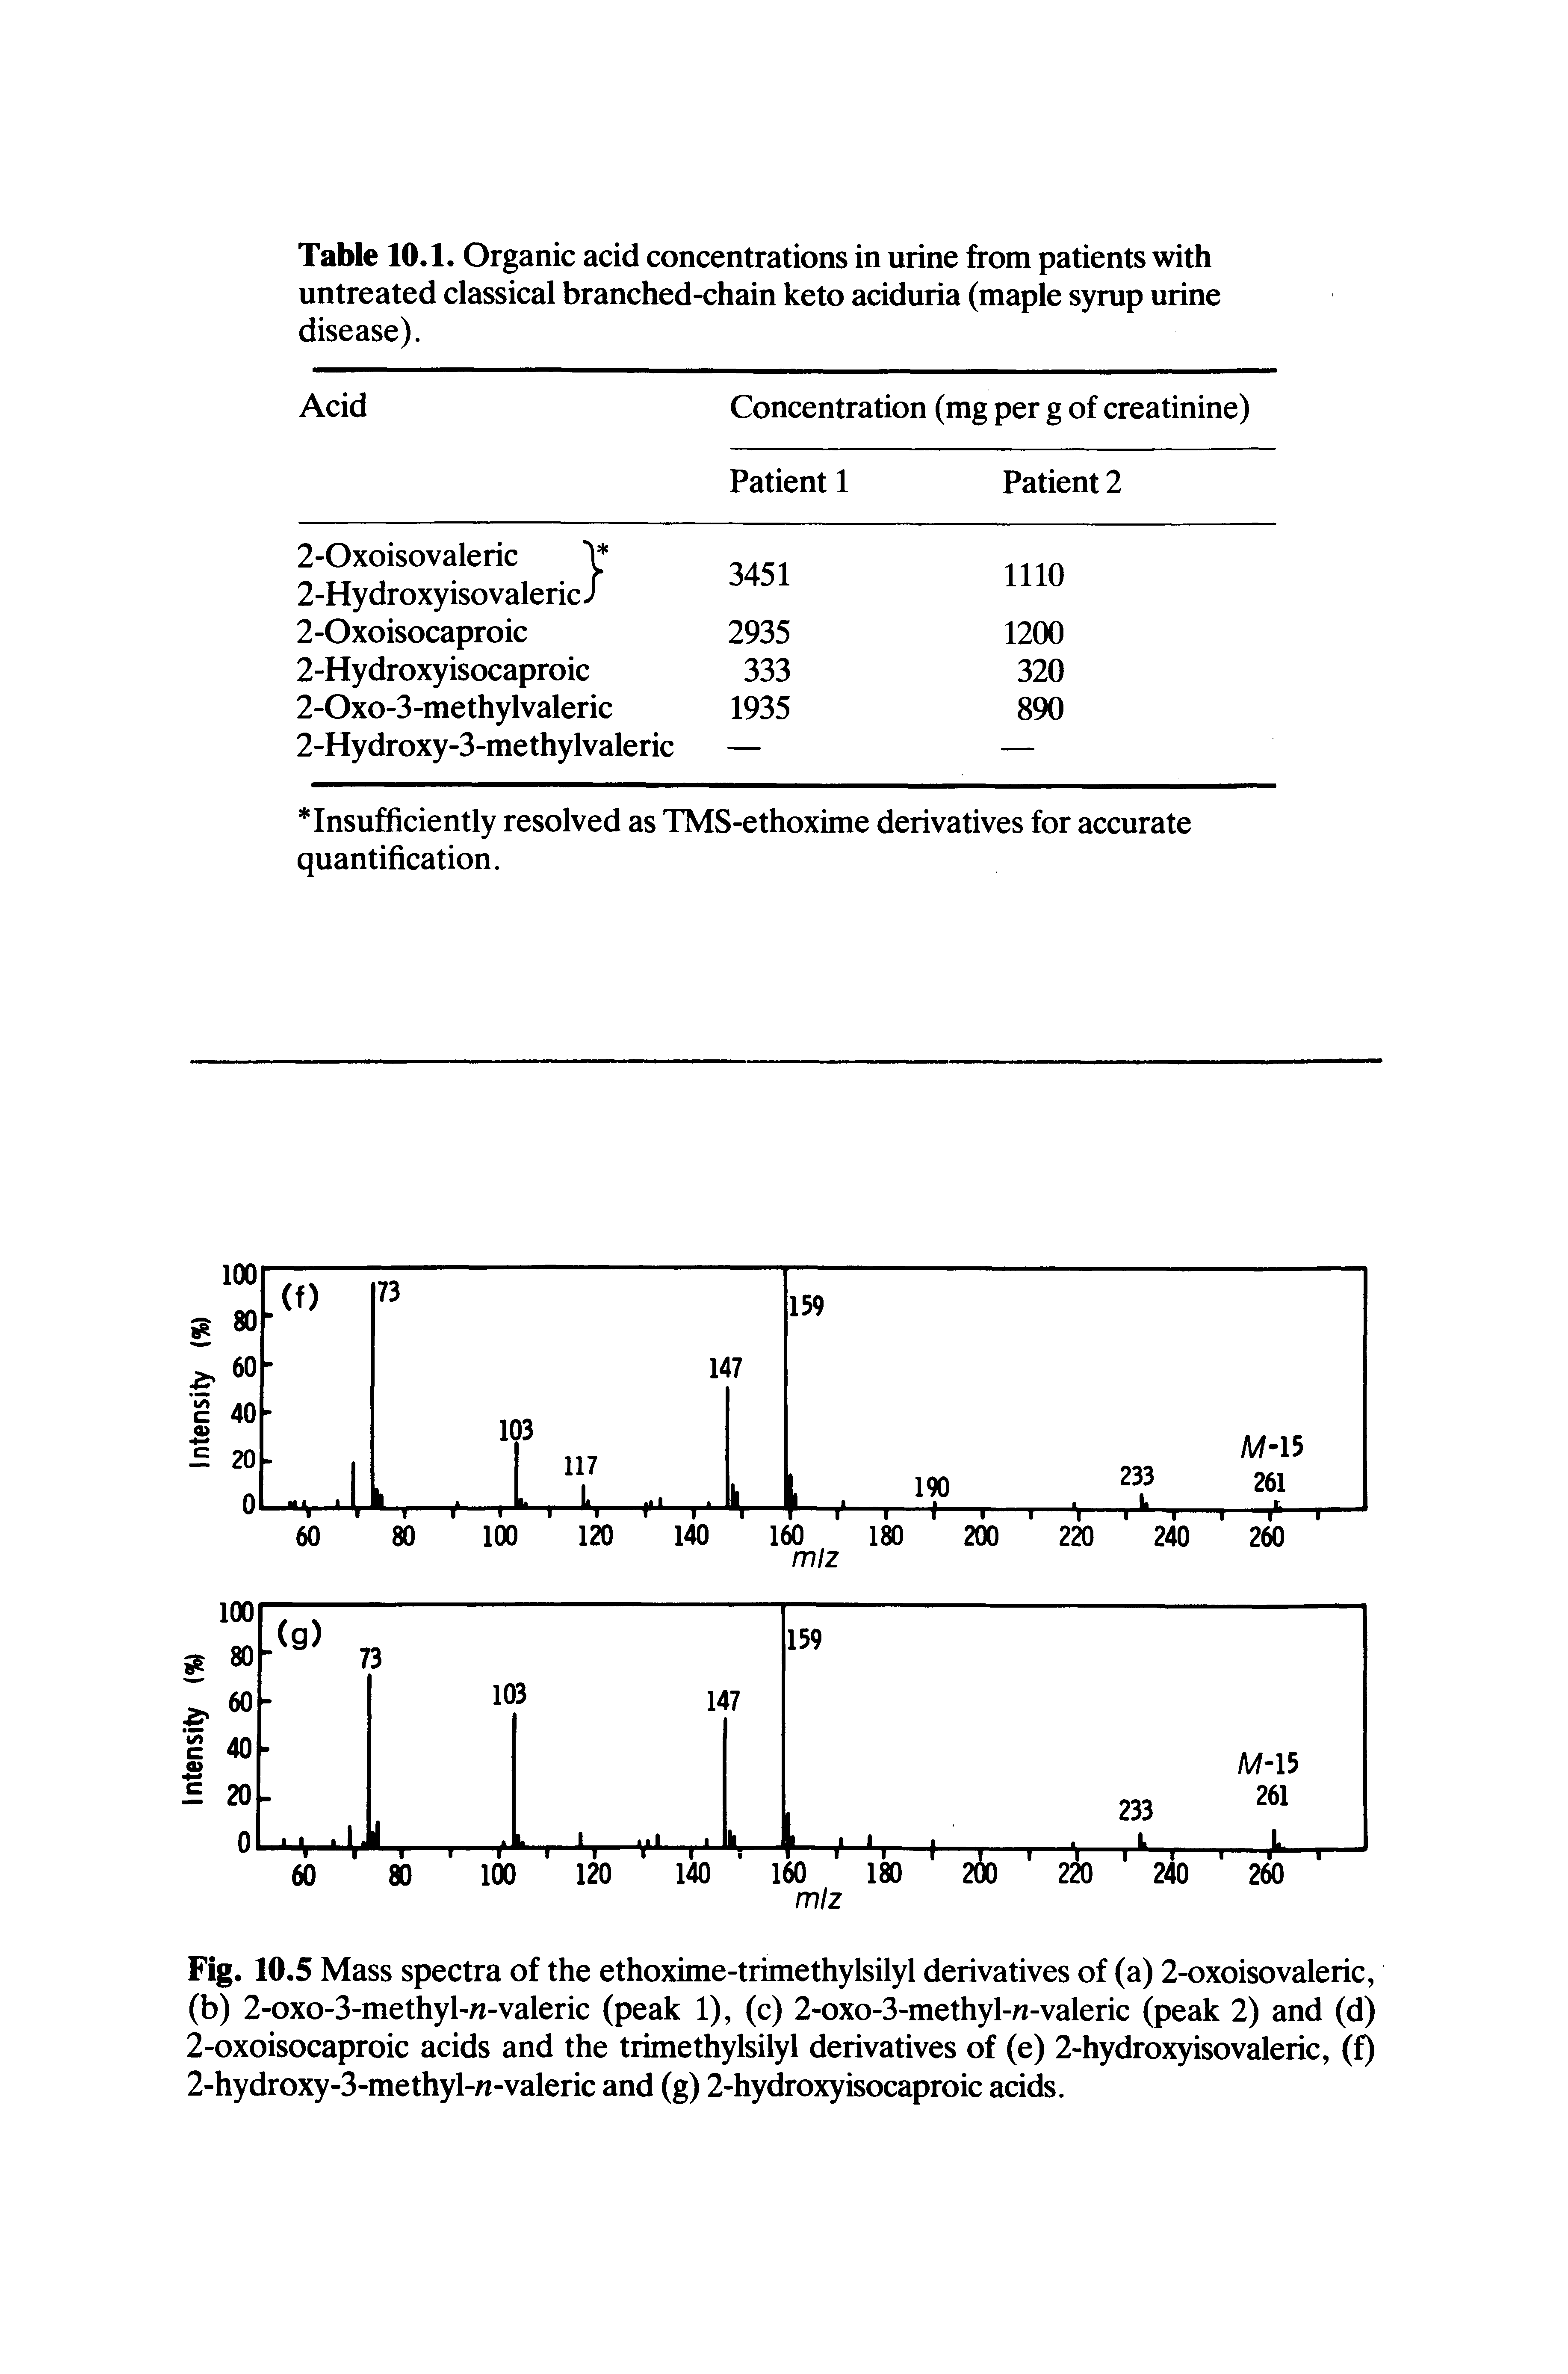 Fig. 10.5 Mass spectra of the ethoxime-trimethylsilyl derivatives of (a) 2-oxoisovaleric, (b) 2-oxo-3-methyl-n-valeric (peak 1), (c) 2-oxo-3-methyl-/i-valeric (peak 2) and (d) 2-oxoisocaproic acids and the trimethylsilyl derivatives of (e) 2-hydroxyisovaleric, (f) 2-hydroxy-3-methyl-rt-valeric and (g) 2-hydroxyisocaproic acids.